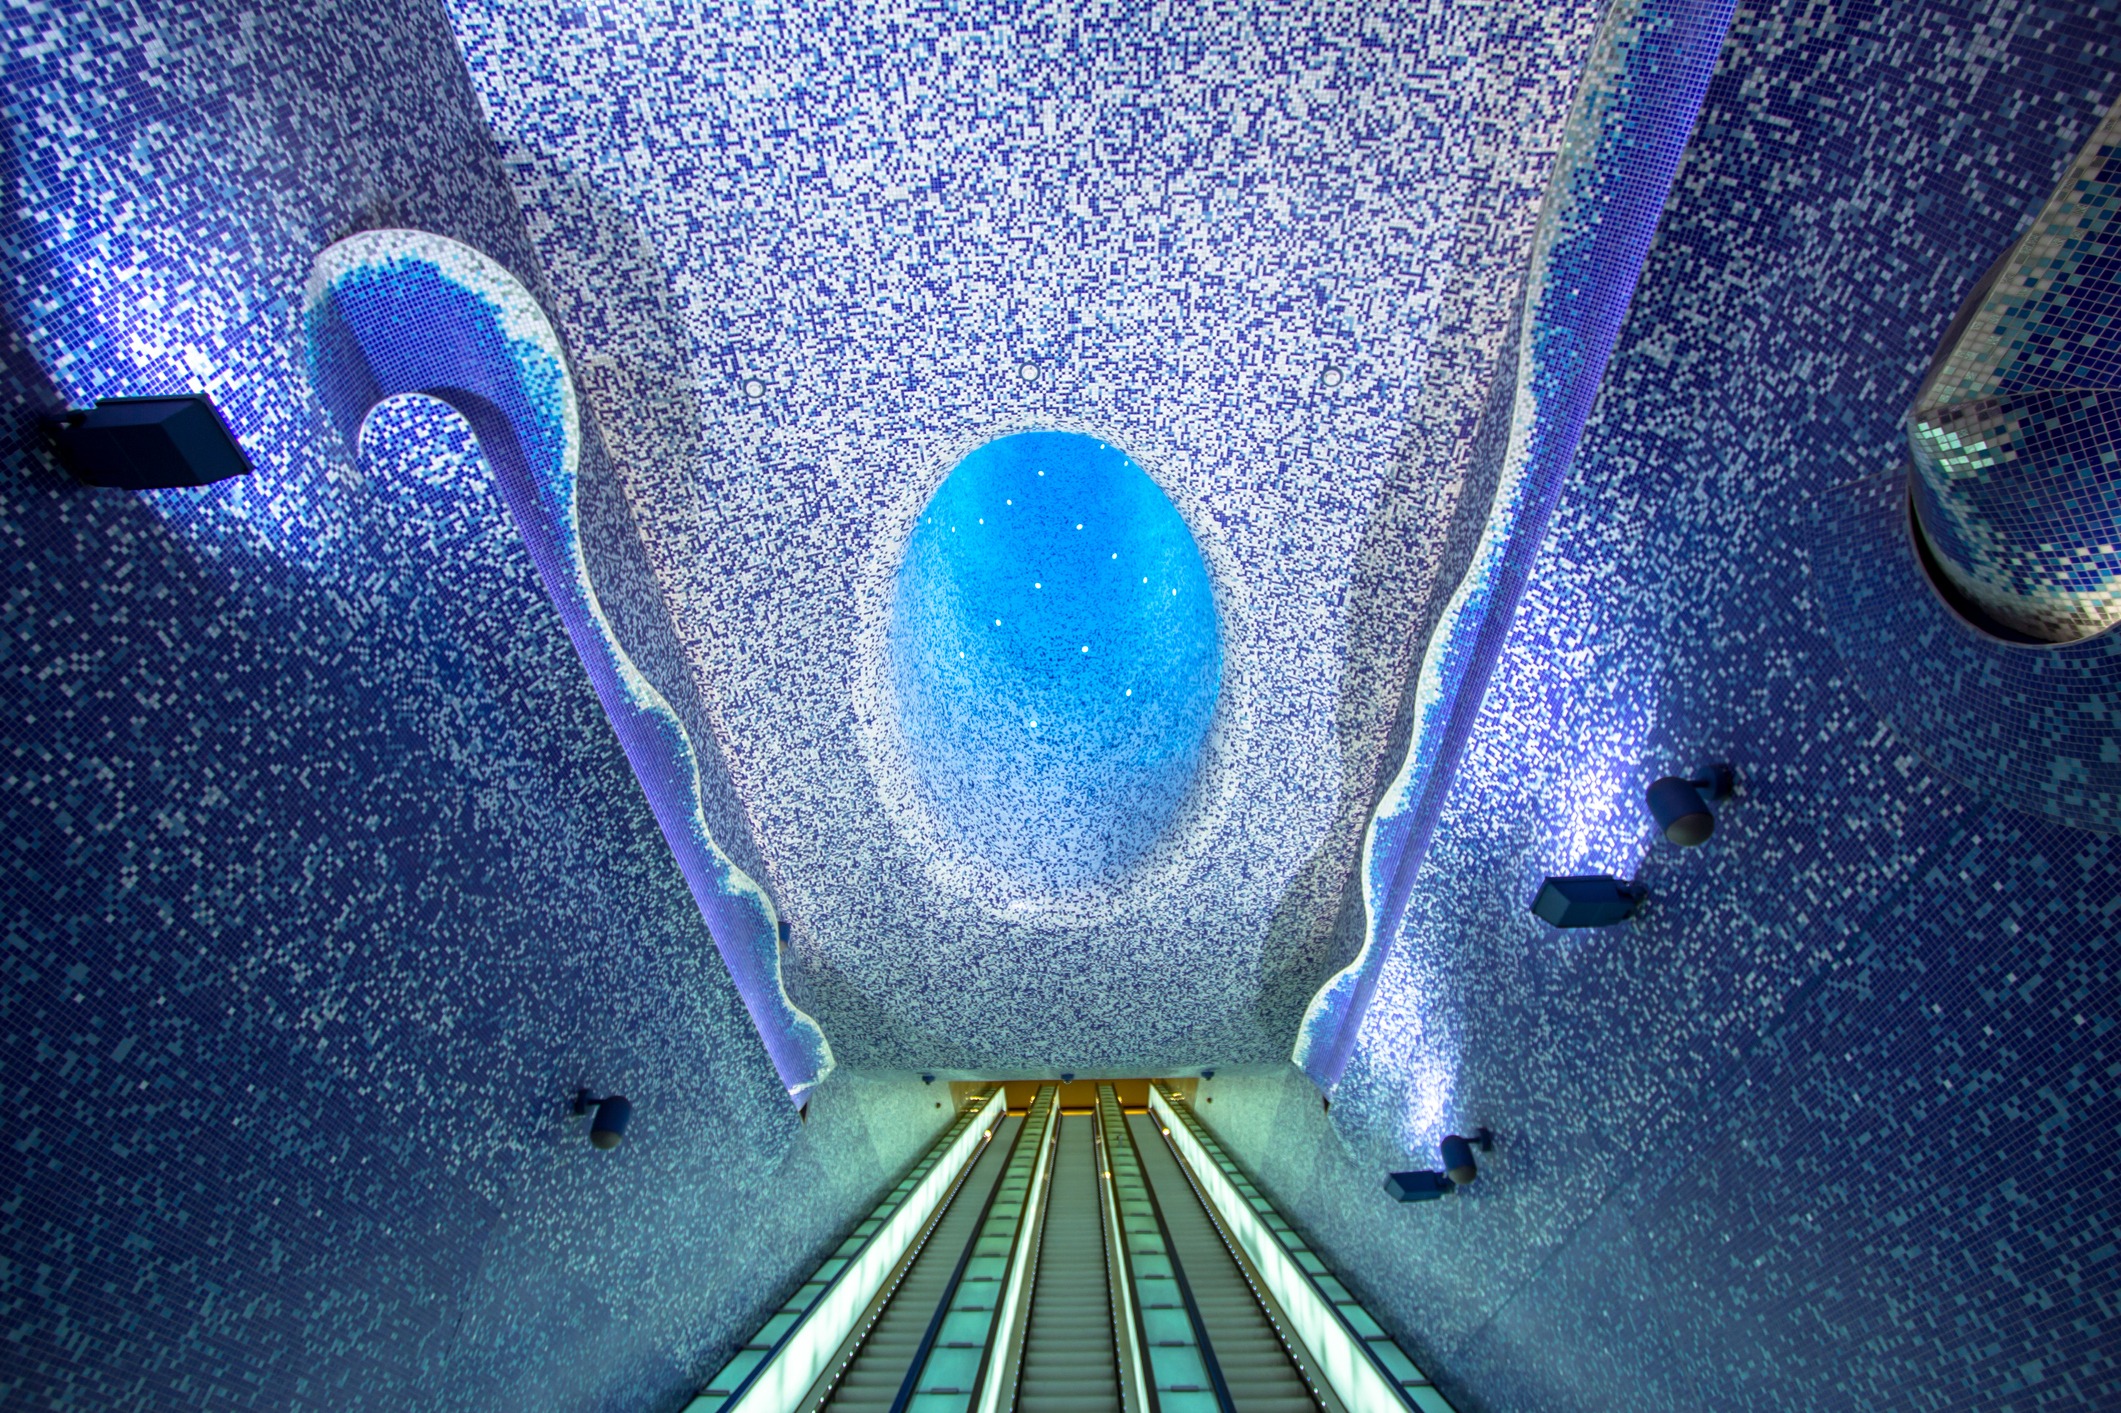 the mesmerizing escalator of Toledo Station in Naples, Italy